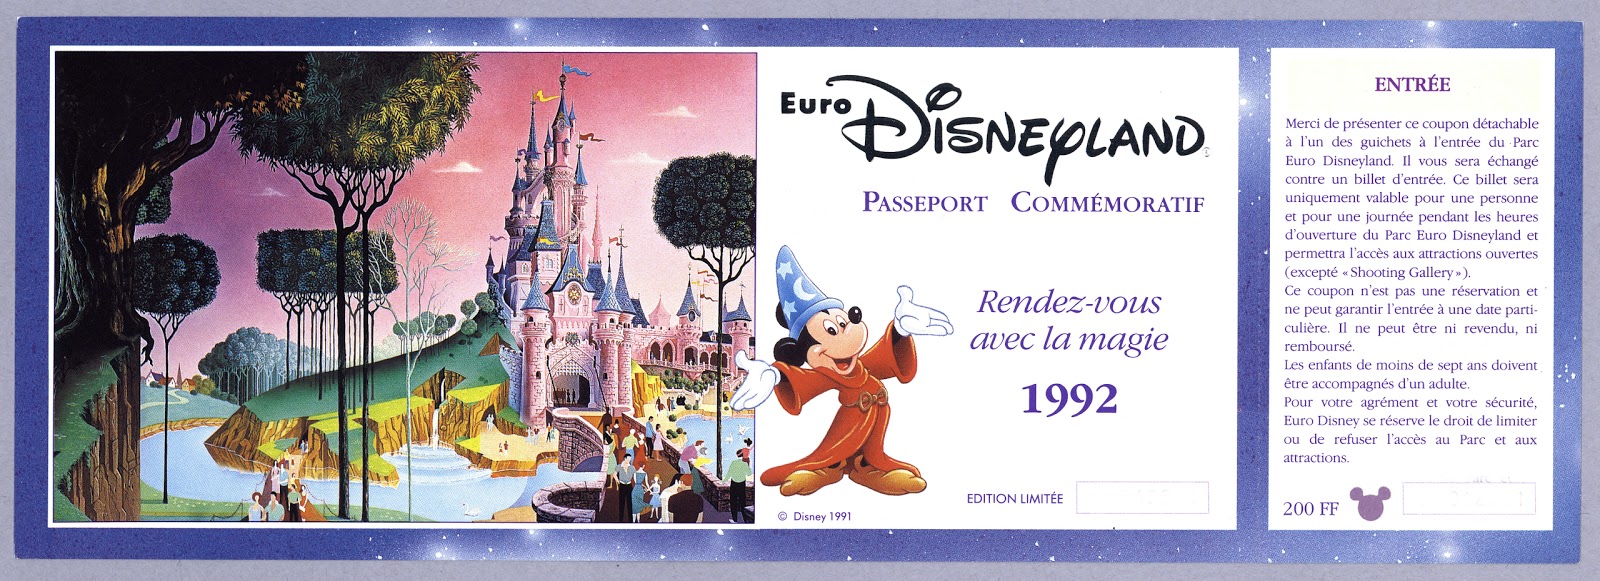 Vintage Disneyland Tickets: Euro Disneyland Commemorative - 1992